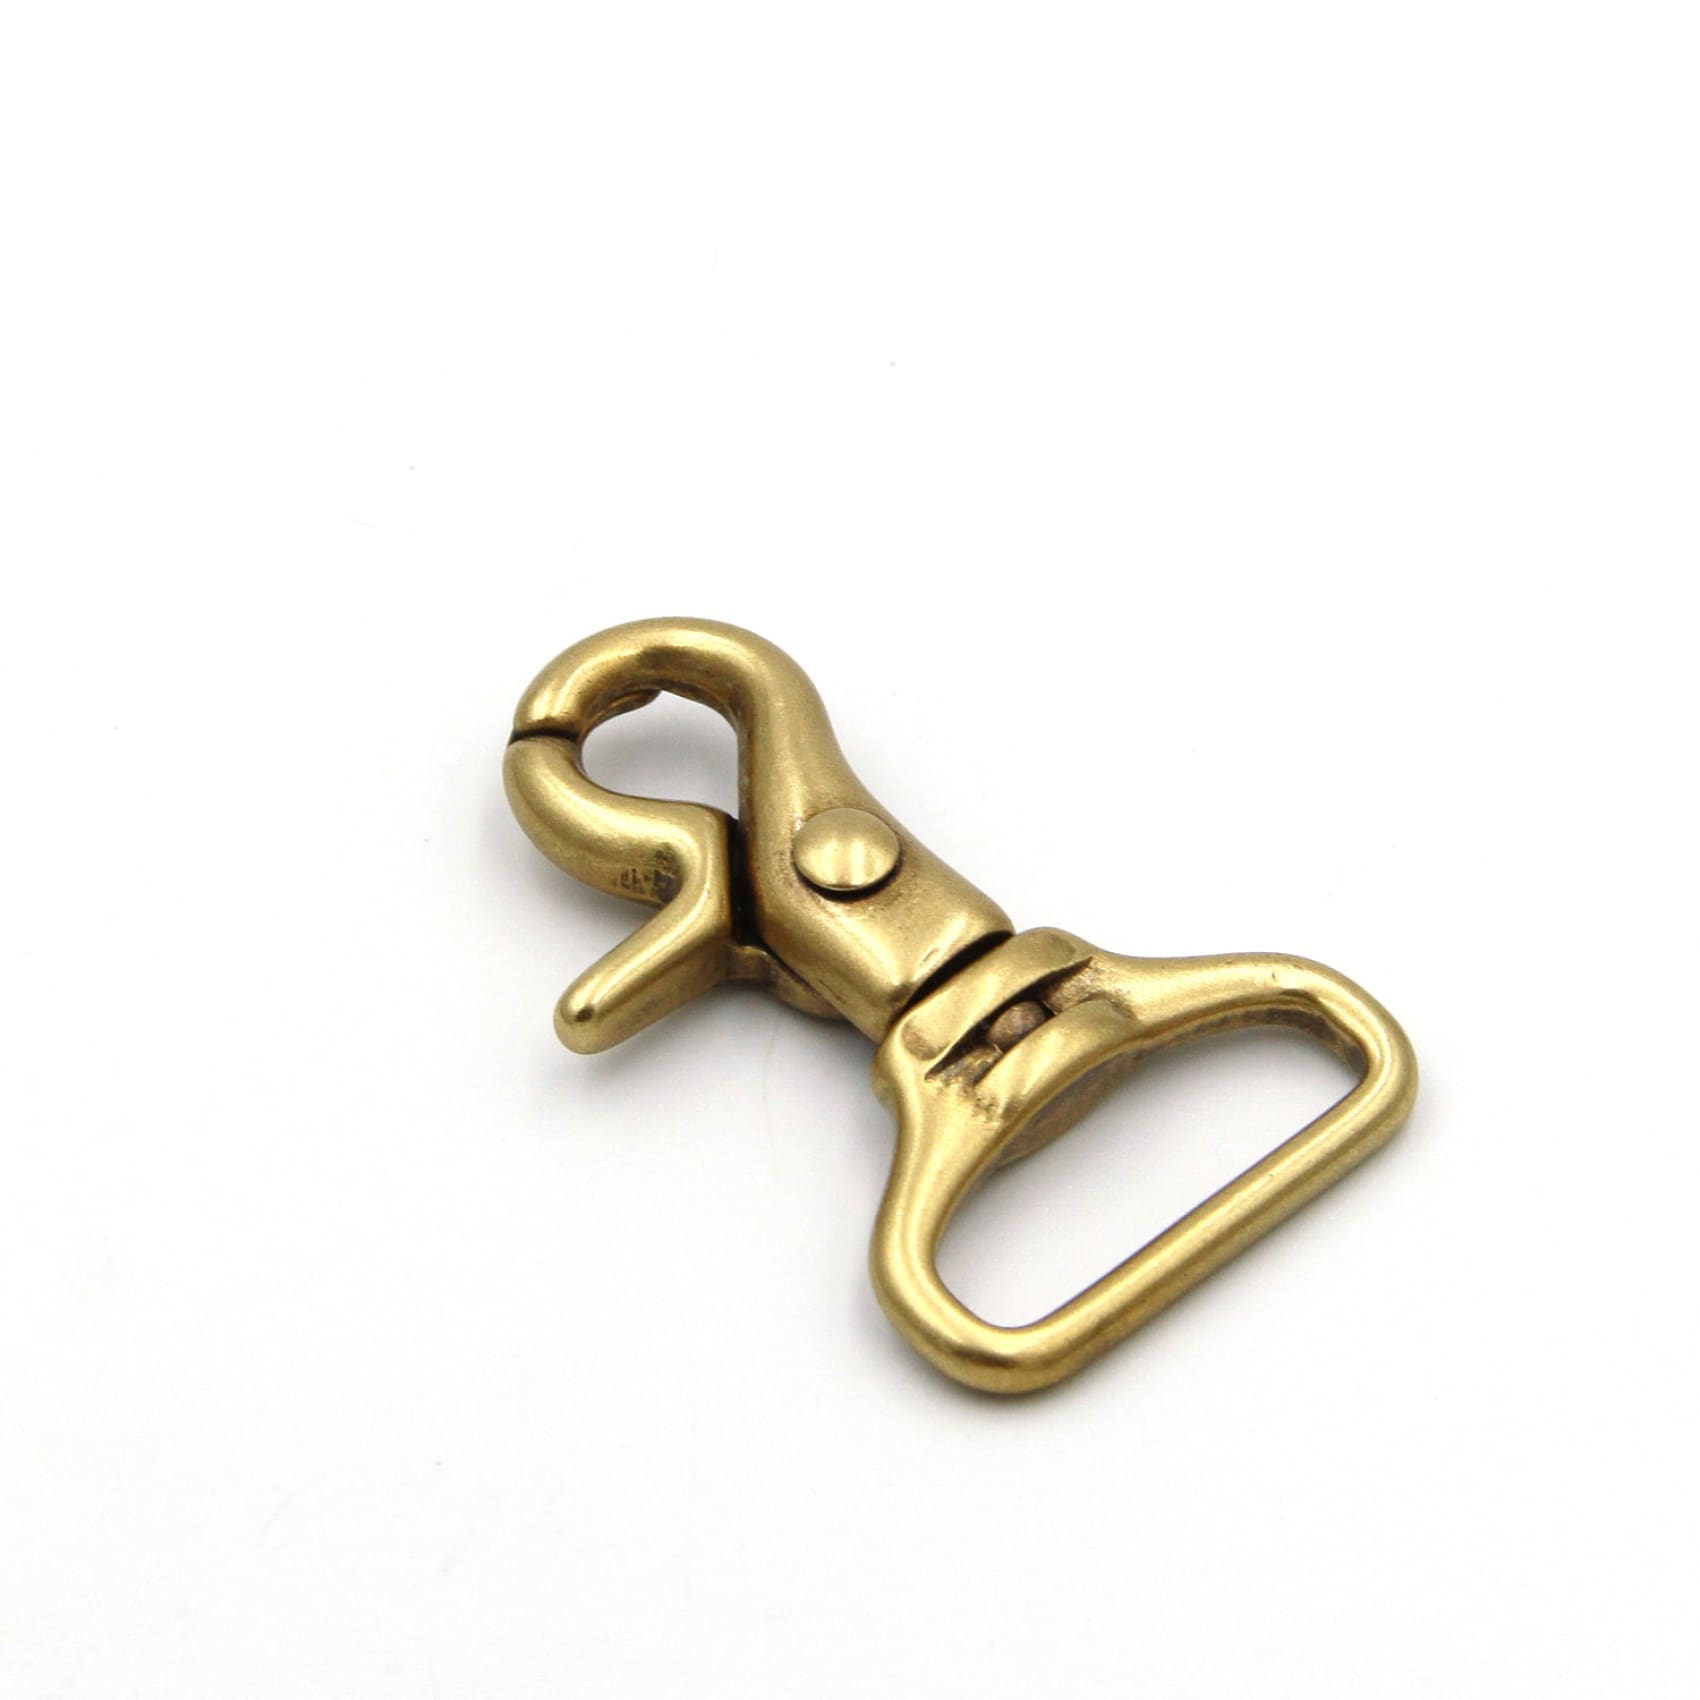 Triangular Loop Clasp Clip Brass Bolt Snap Hook 26mm